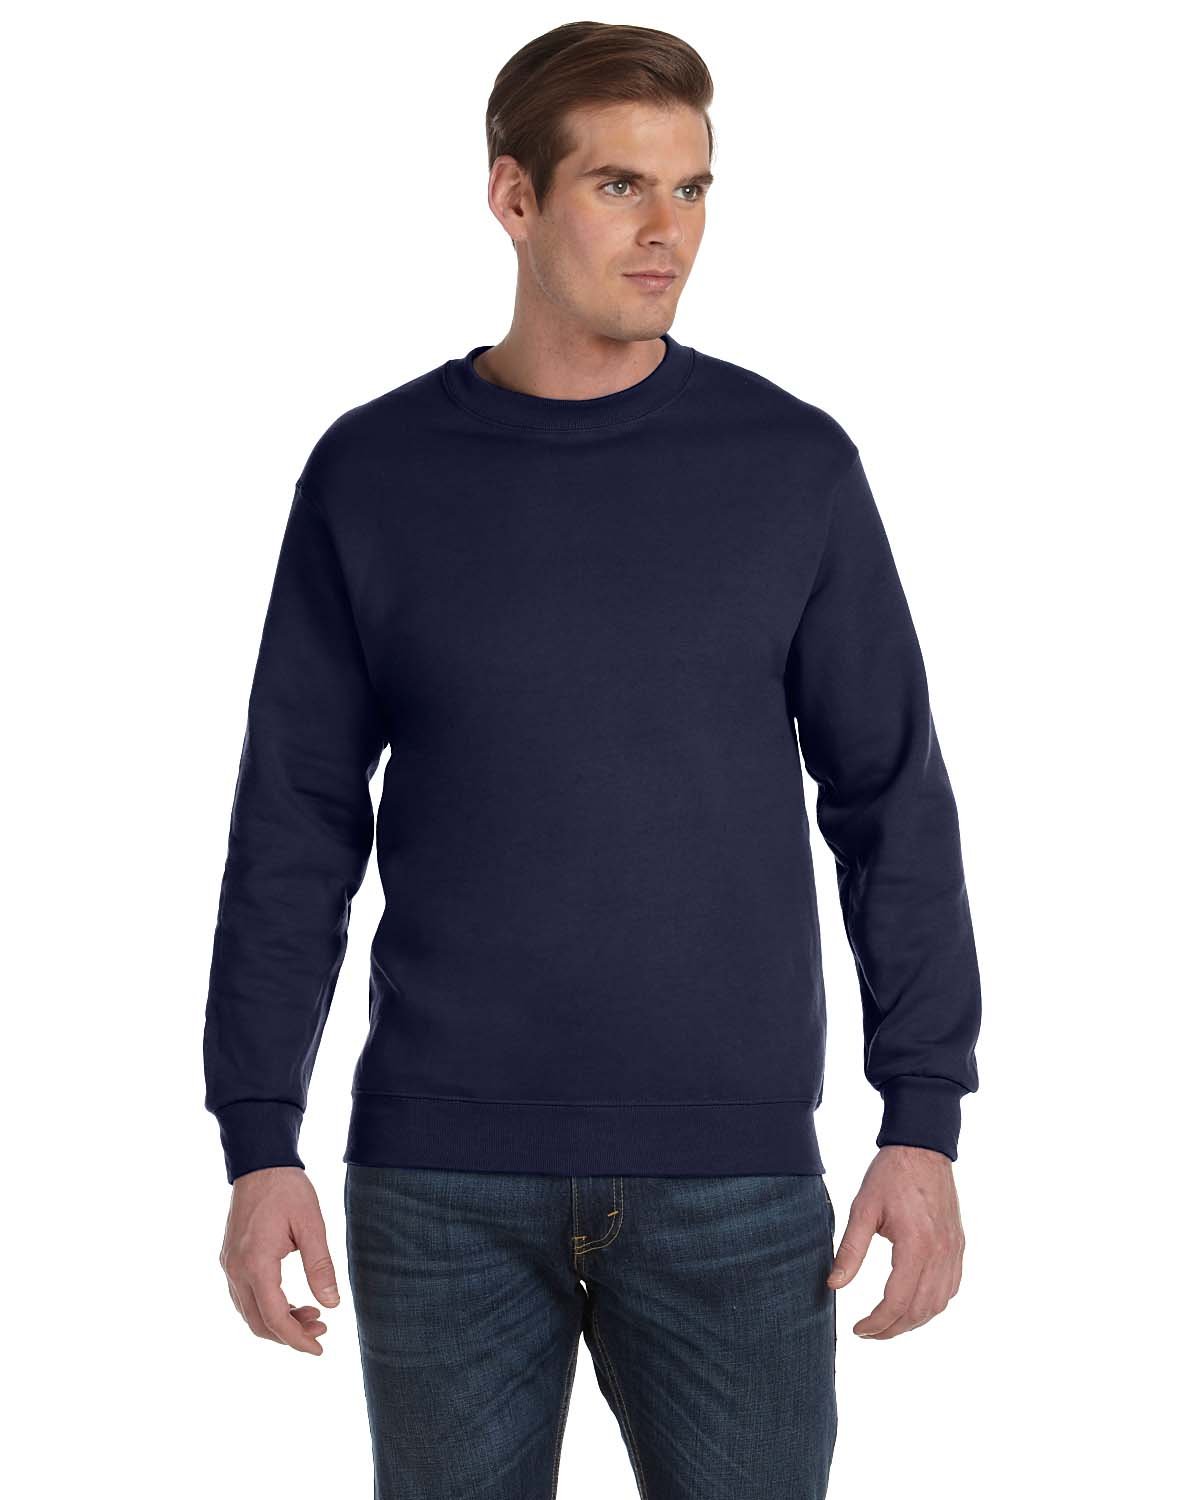 Sweatshirt, Crewneck, Navy